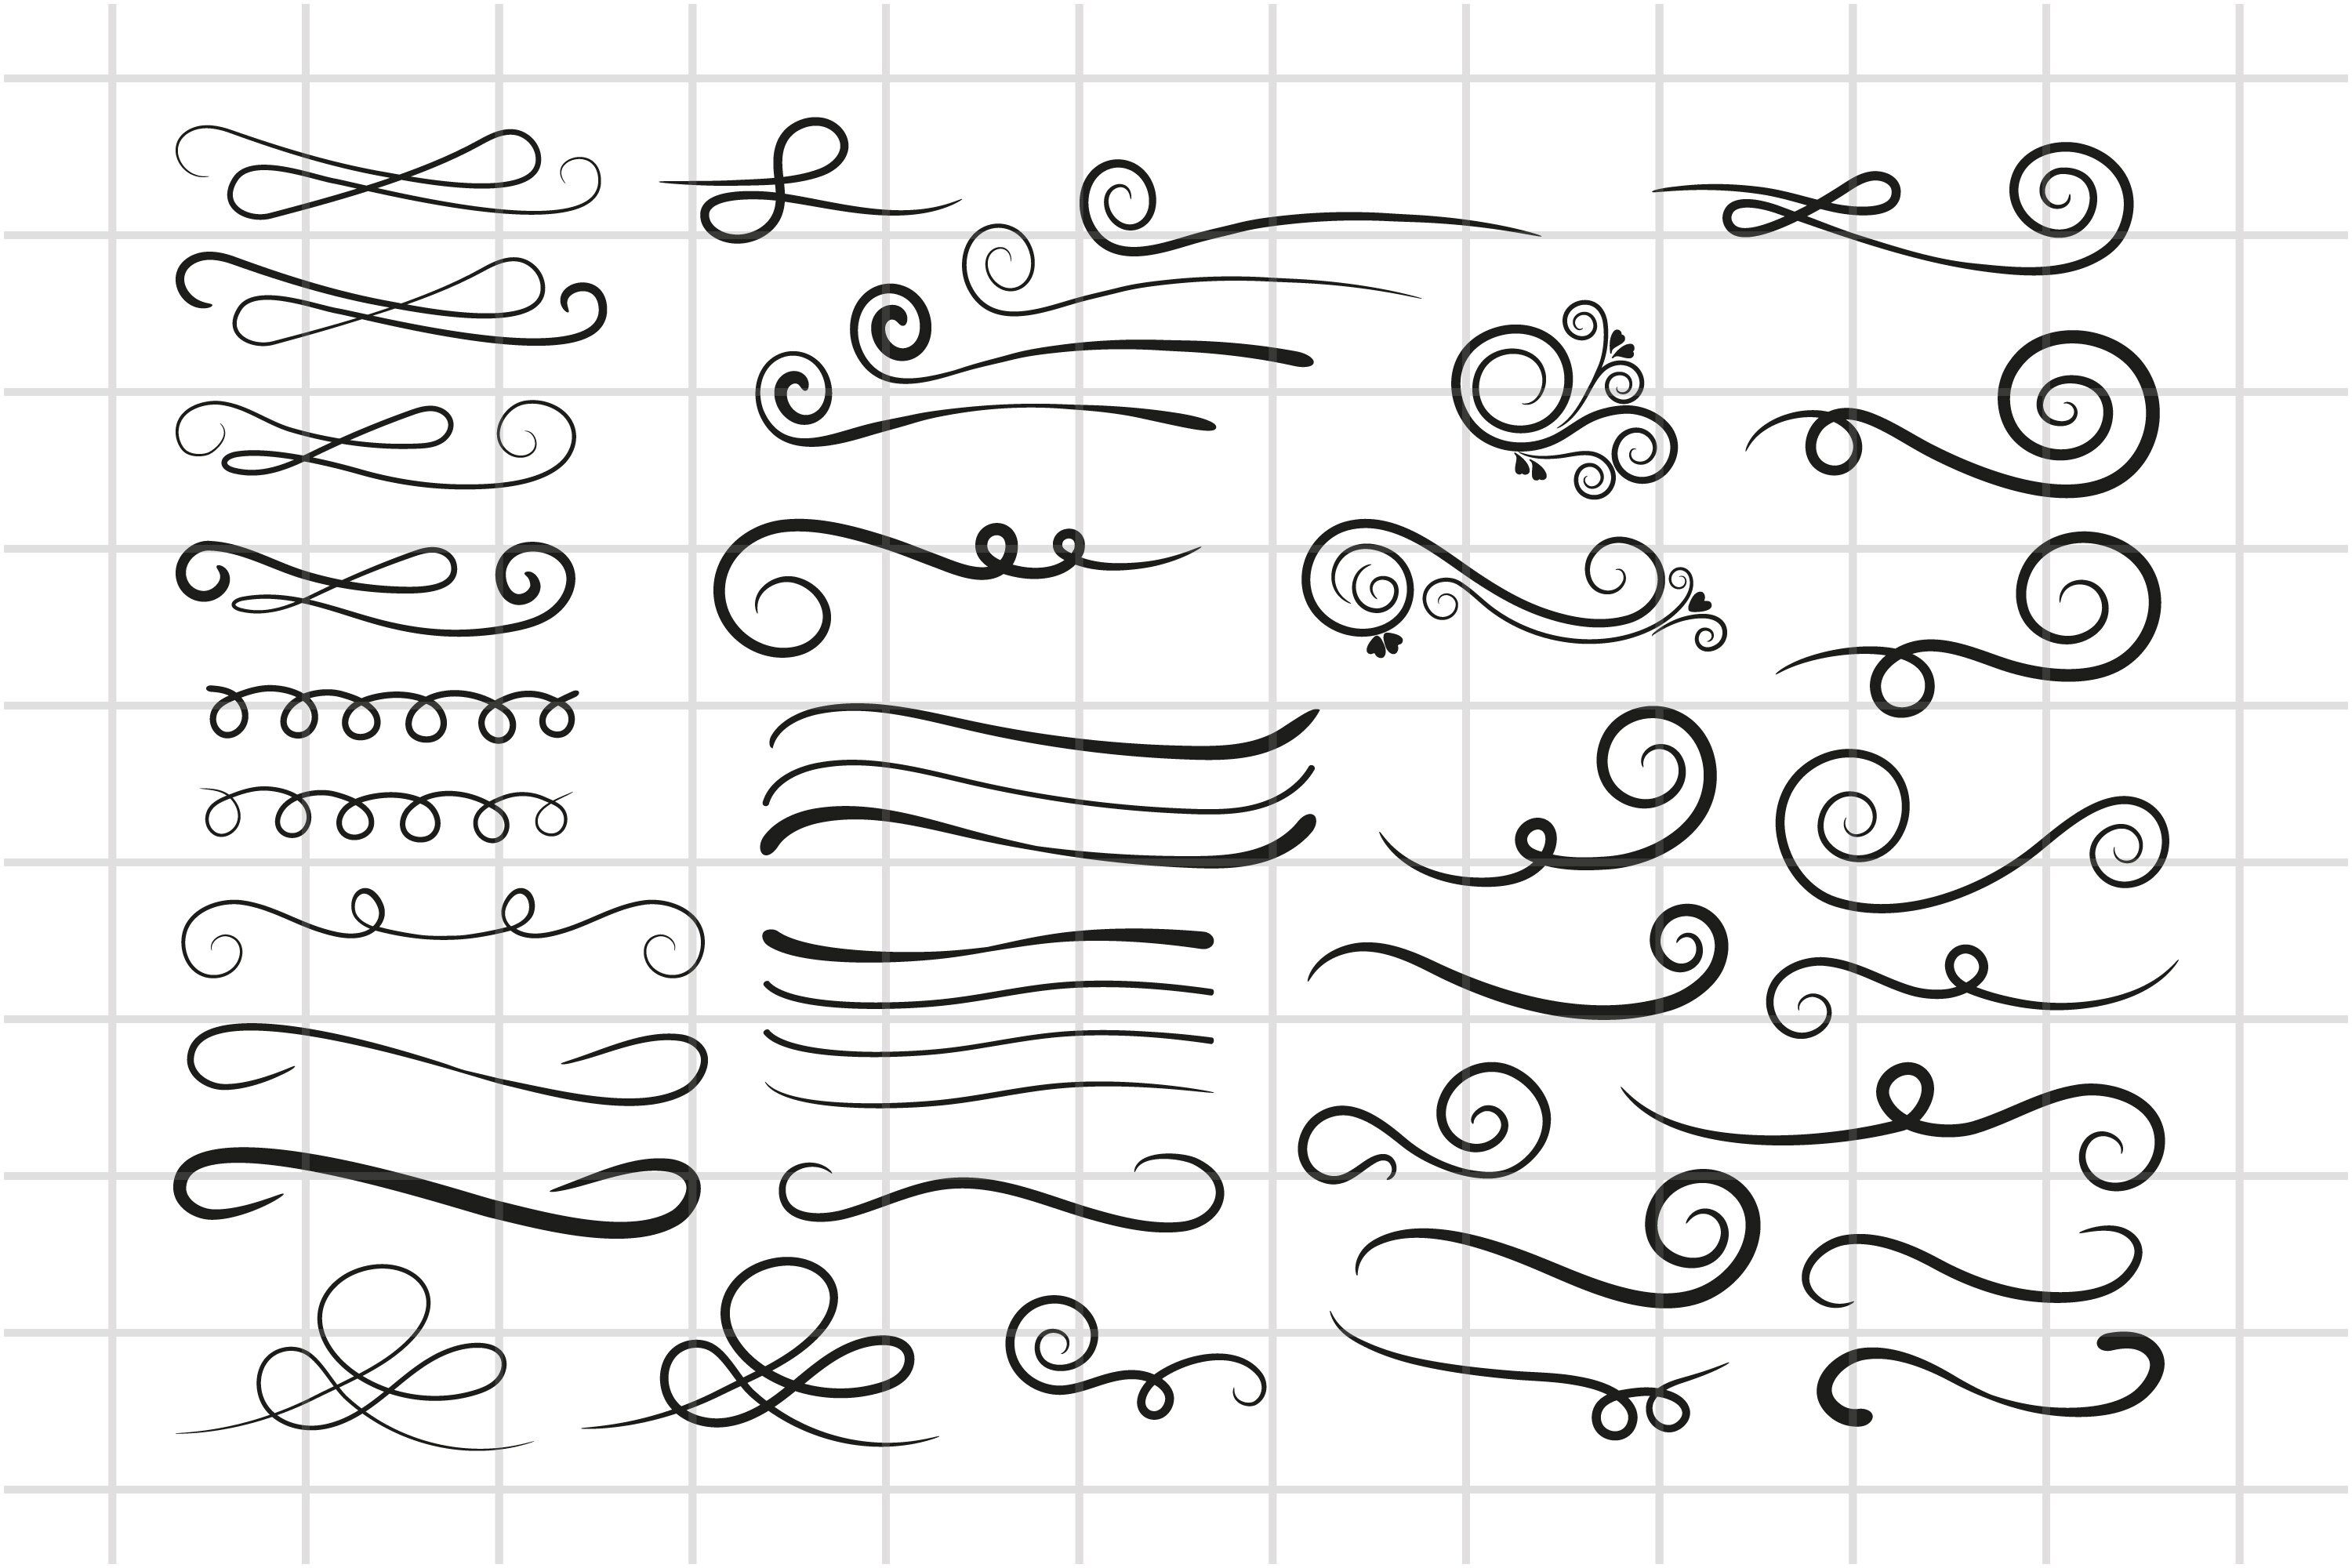 Swirl SVG Cut File, Swoosh Flourish sign, Cut (1570602)